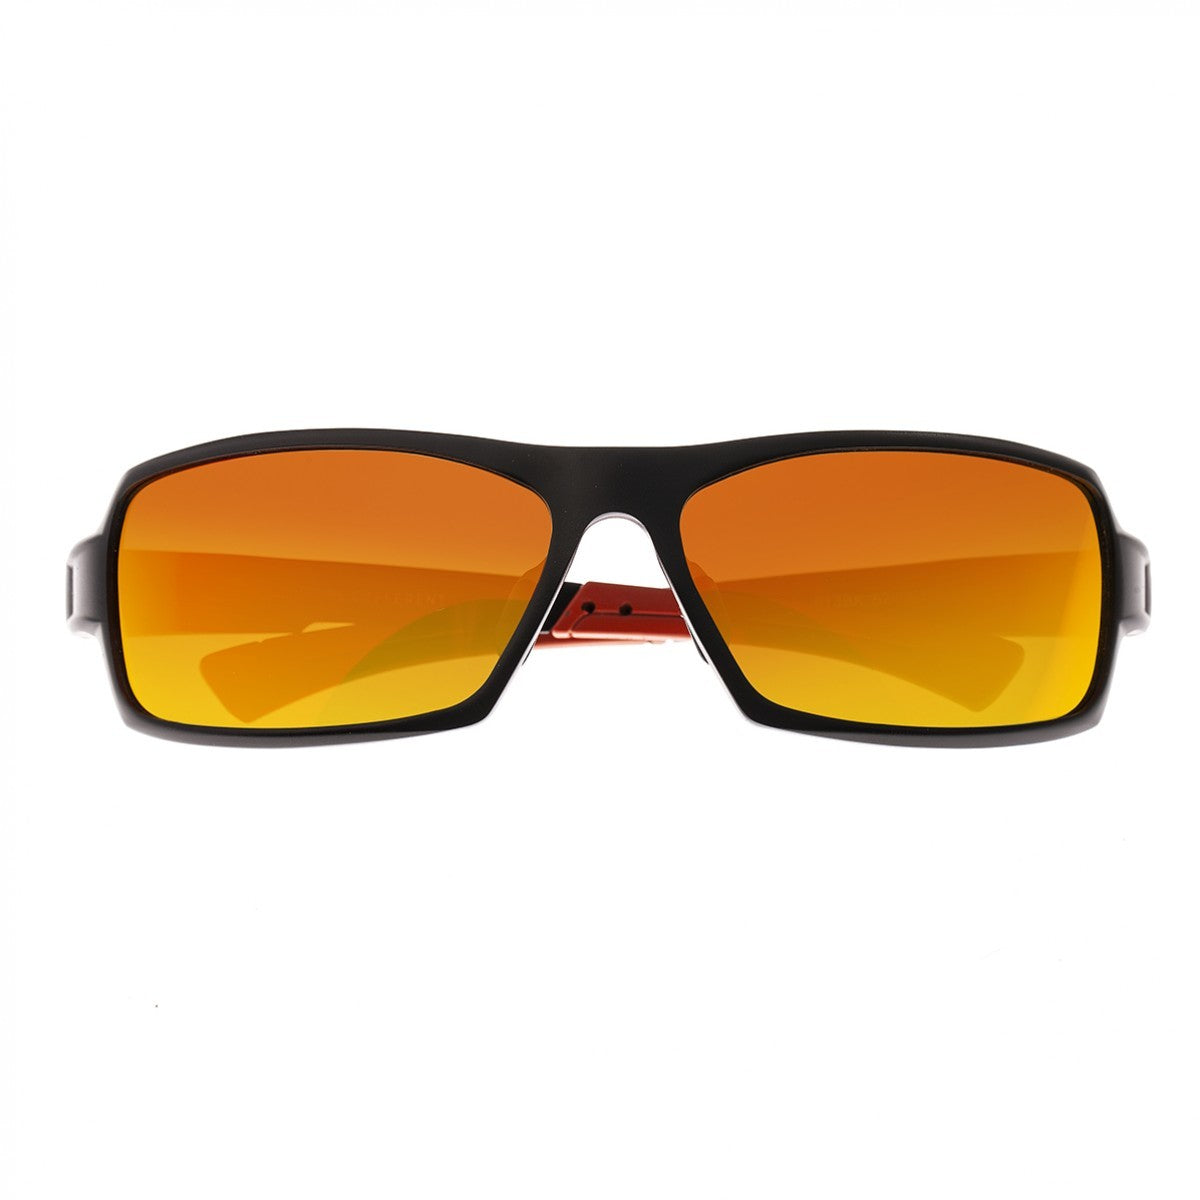 Breed Cosmos Aluminium Polarized Sunglasses - Black/Red-Yellow - BSG013BK